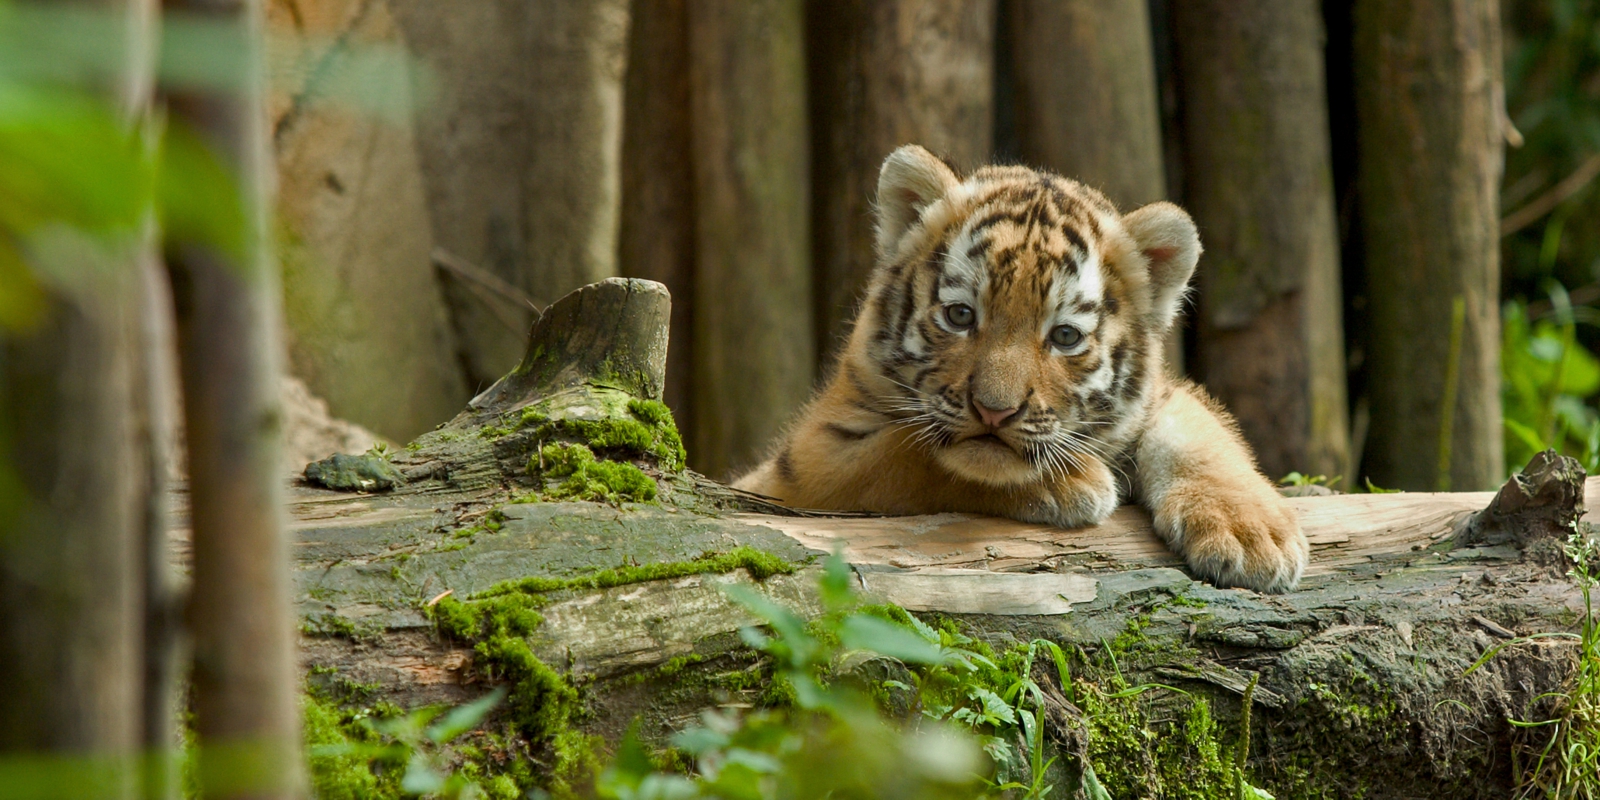 Vlies Tapete Poster Fototapete Panorama Sibirischer Tiger Junges Baby